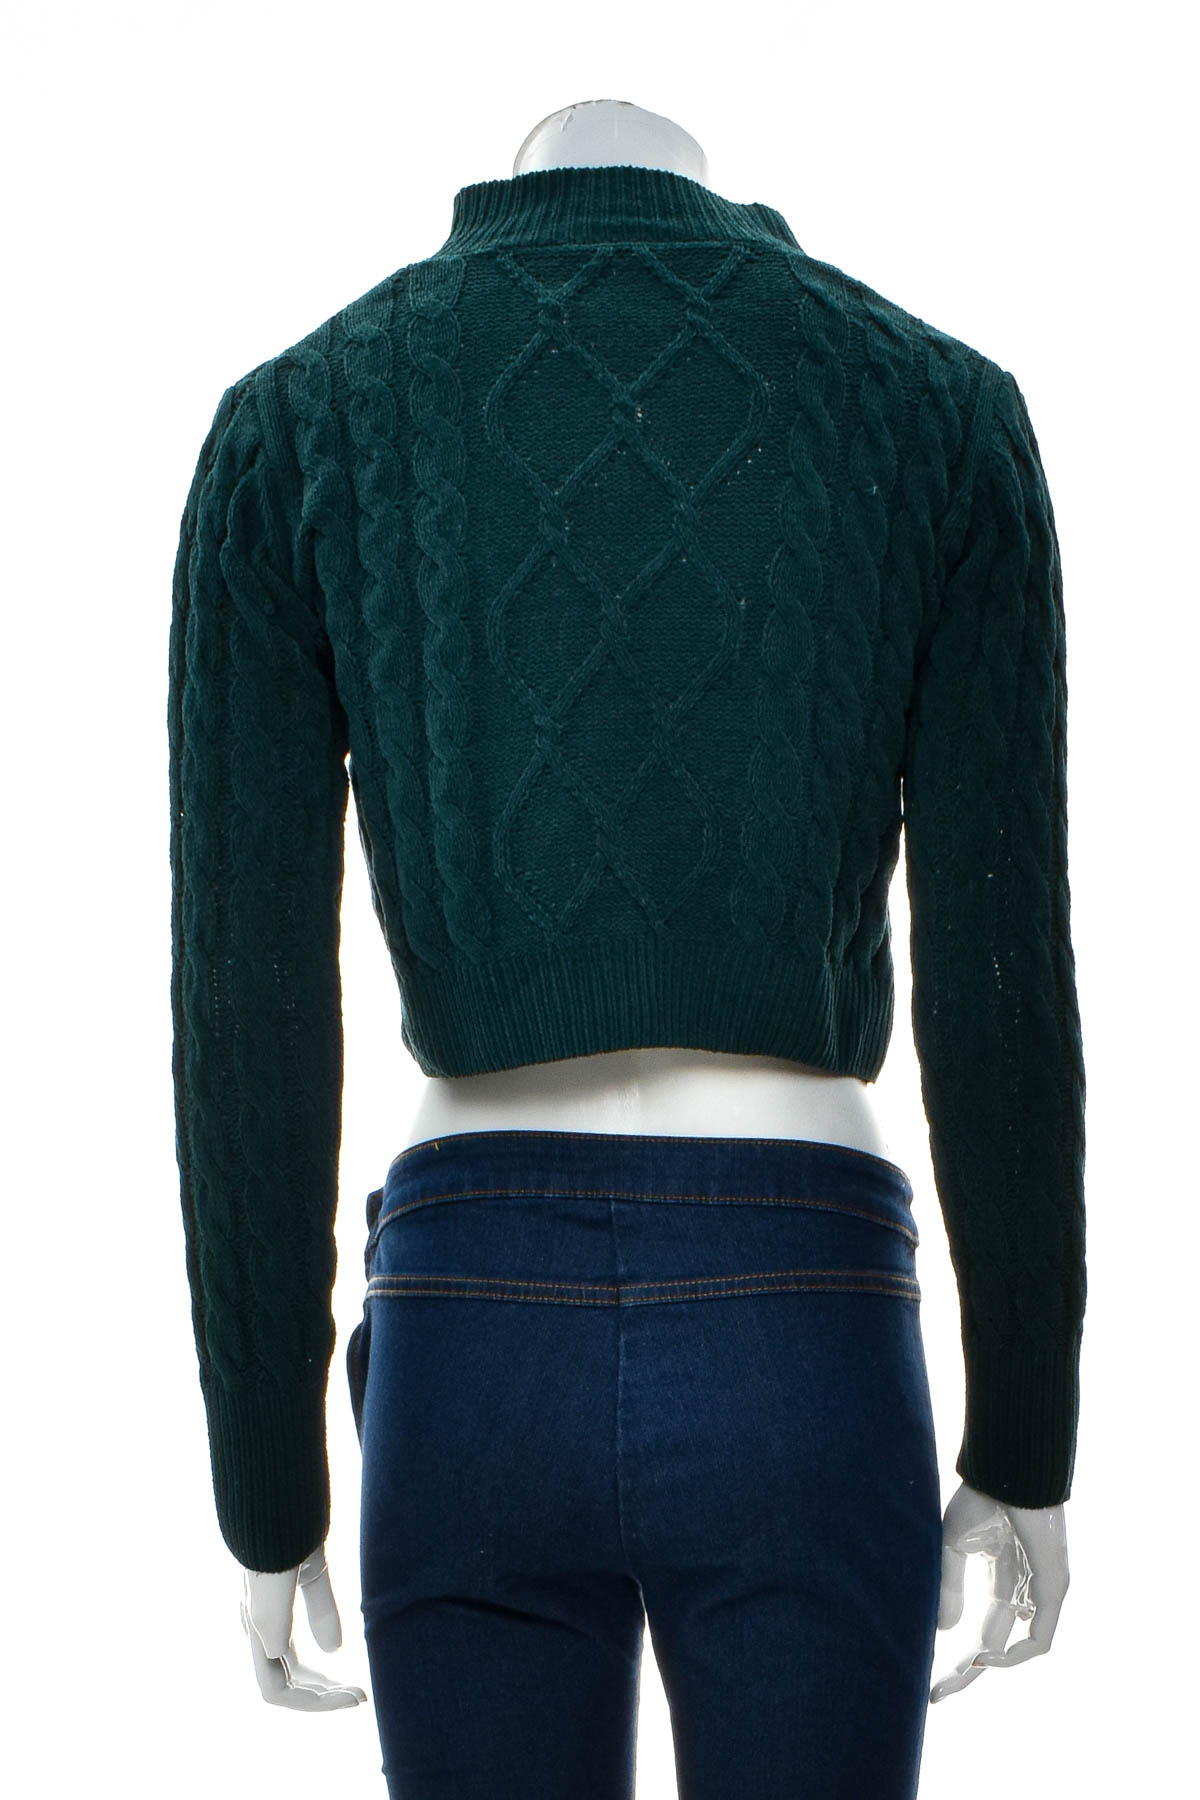 Women's sweater - Tally Weijl - 1